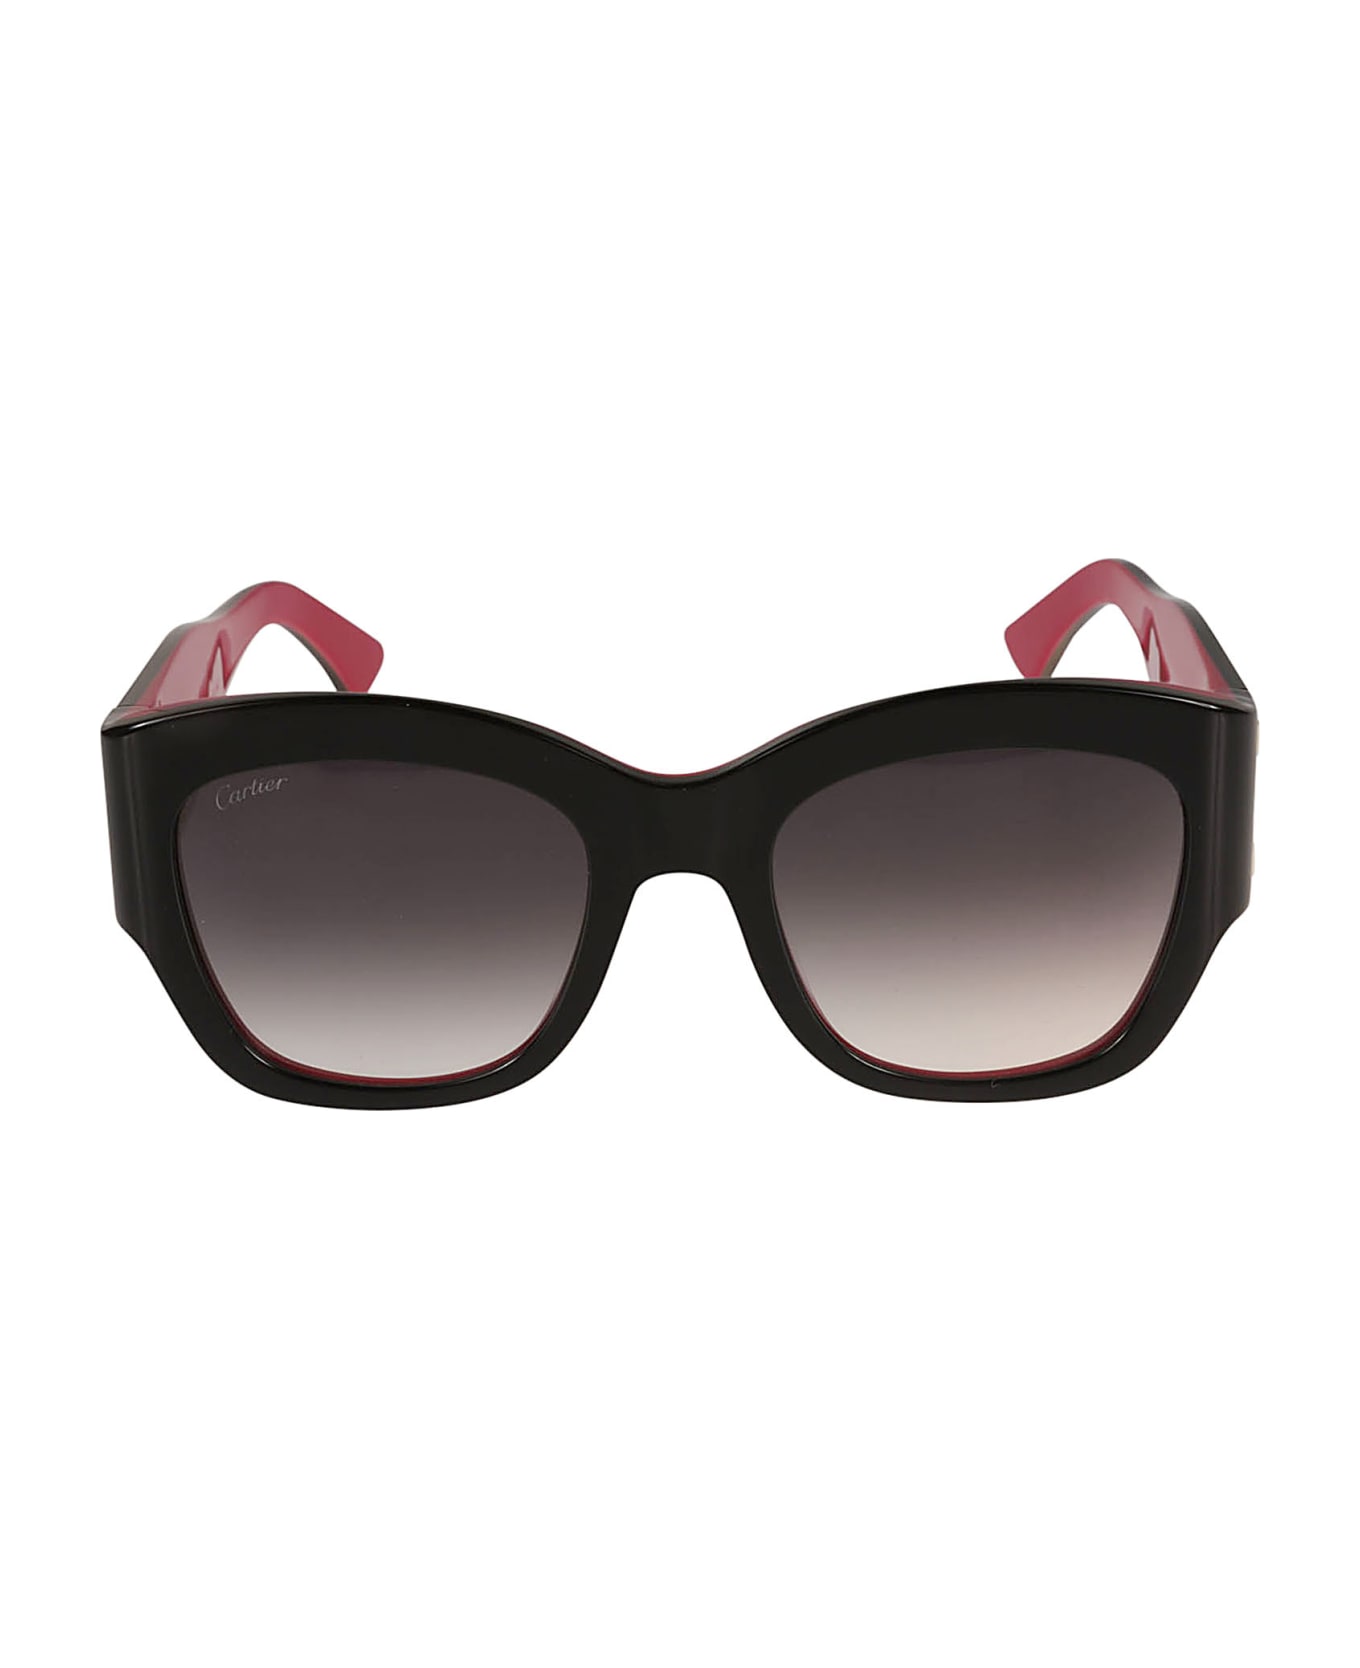 Cartier Eyewear Curved Square Sunglasses - Black サングラス